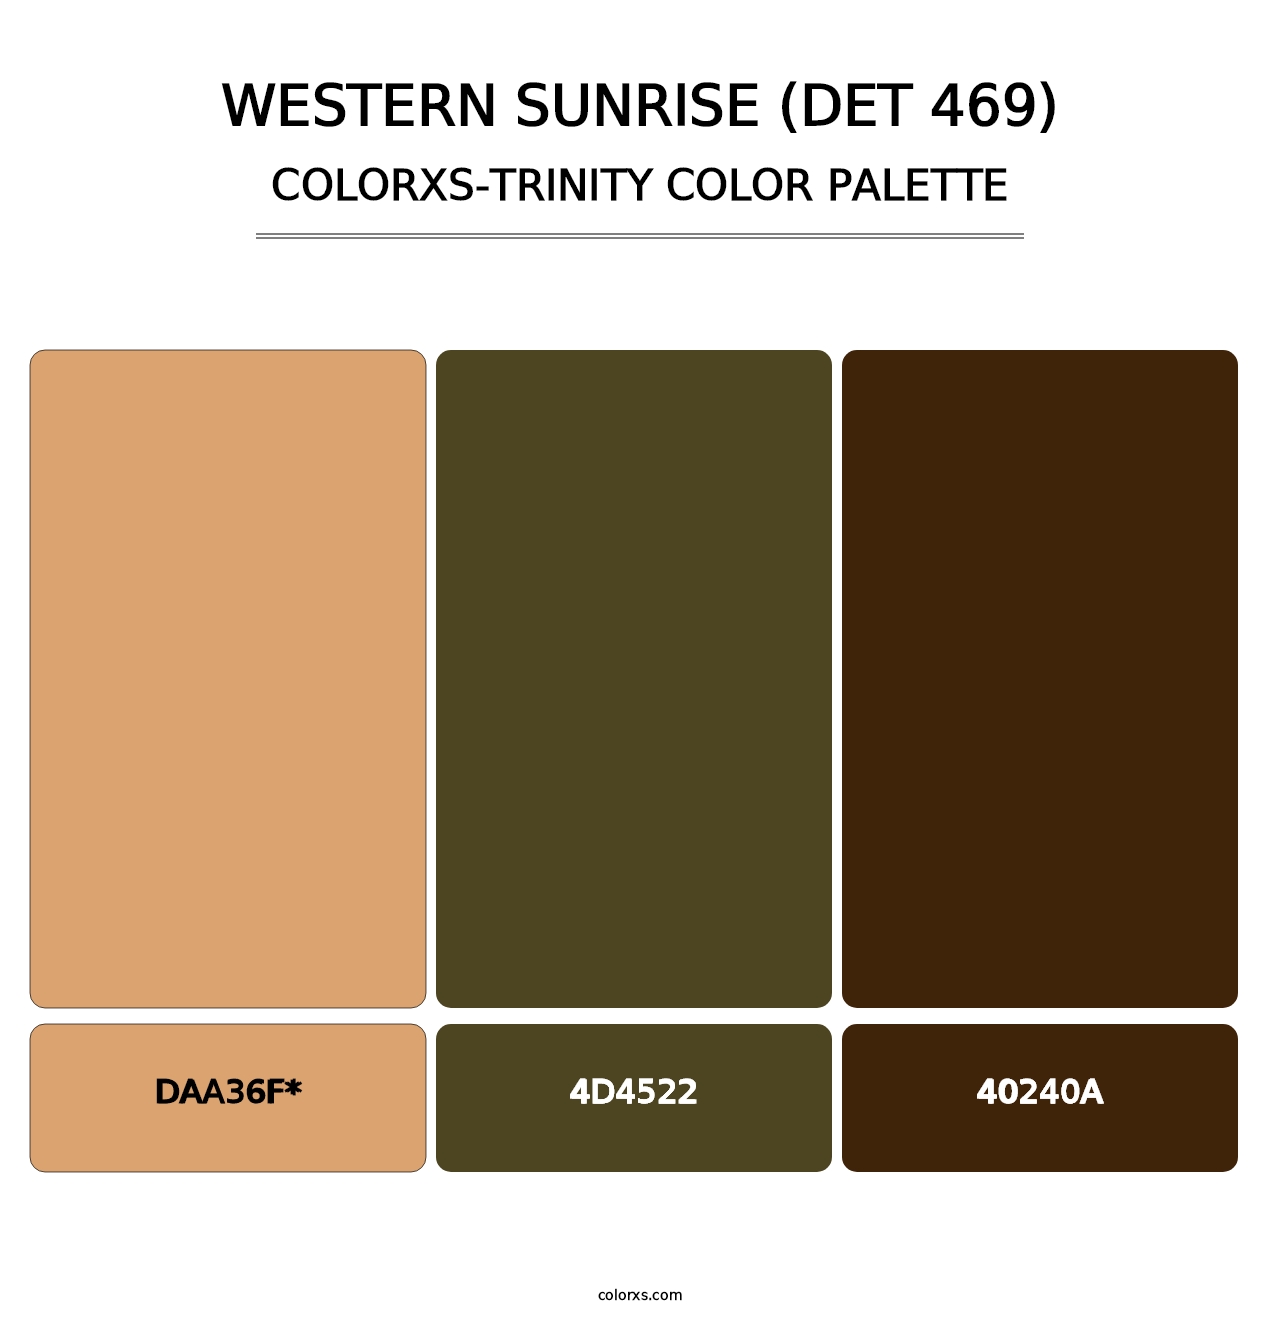 Western Sunrise (DET 469) - Colorxs Trinity Palette